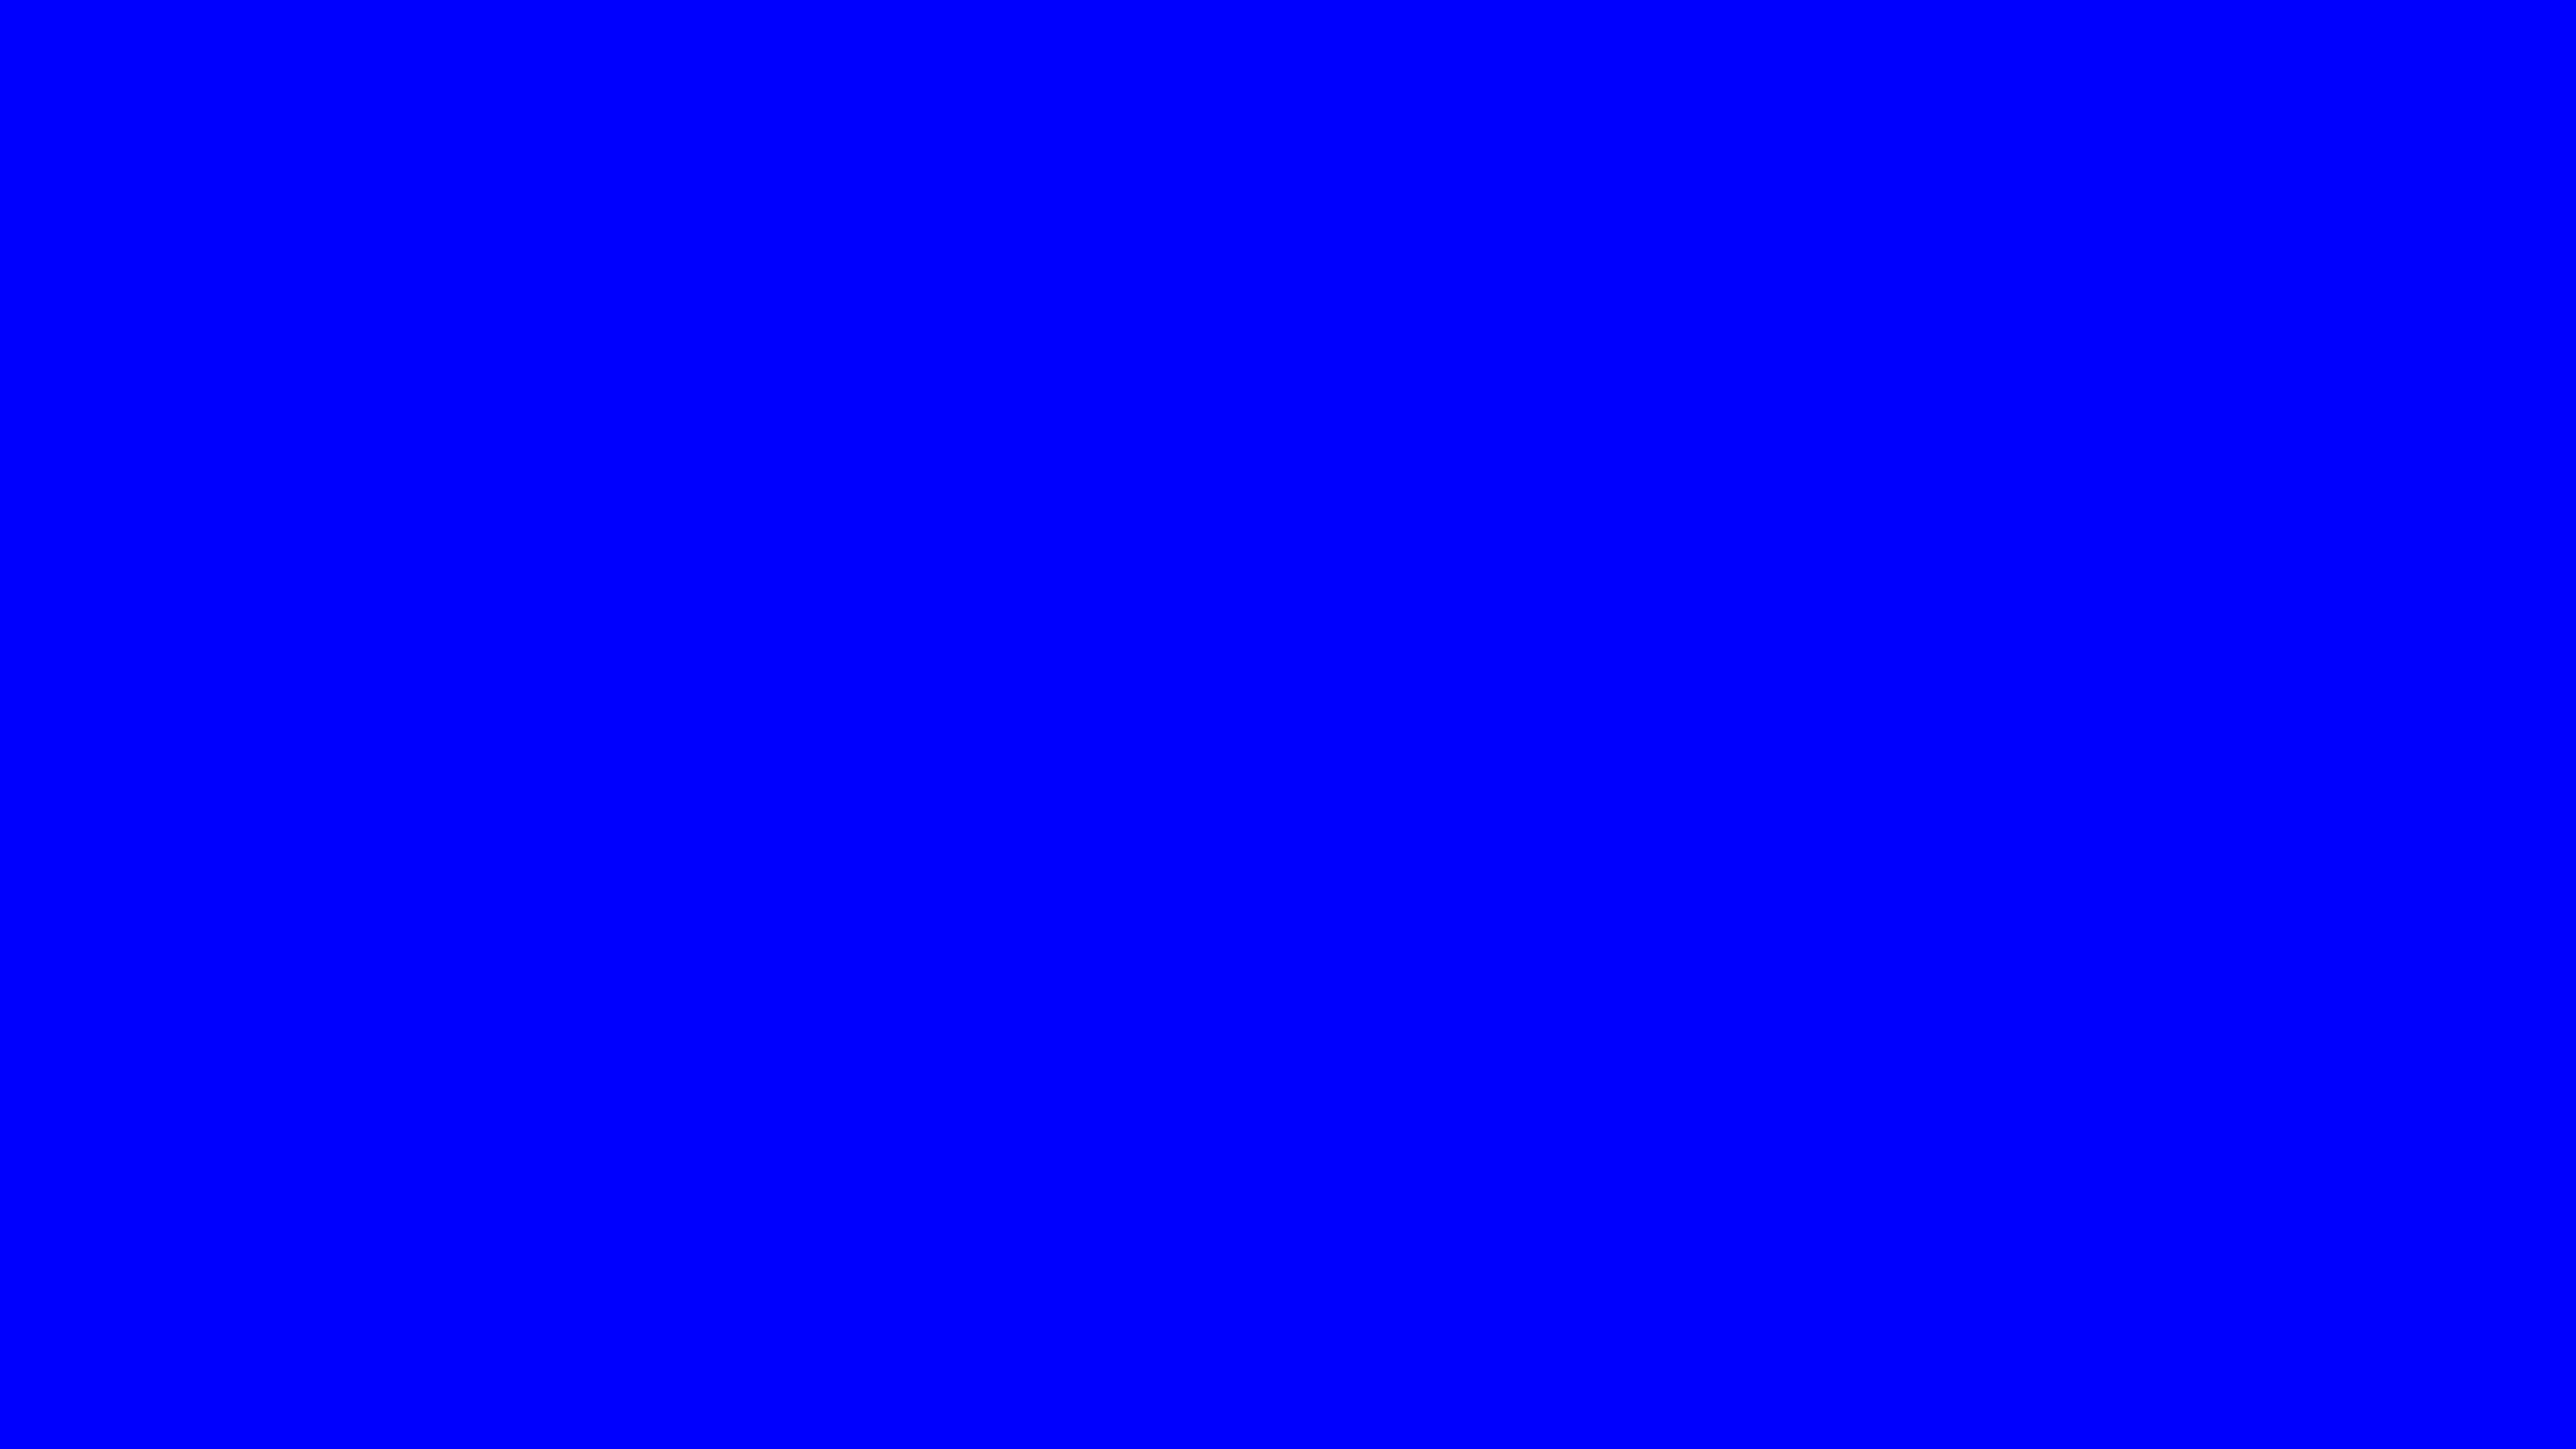 Sky Blue Plain Wallpaper Vector Images (over 260)